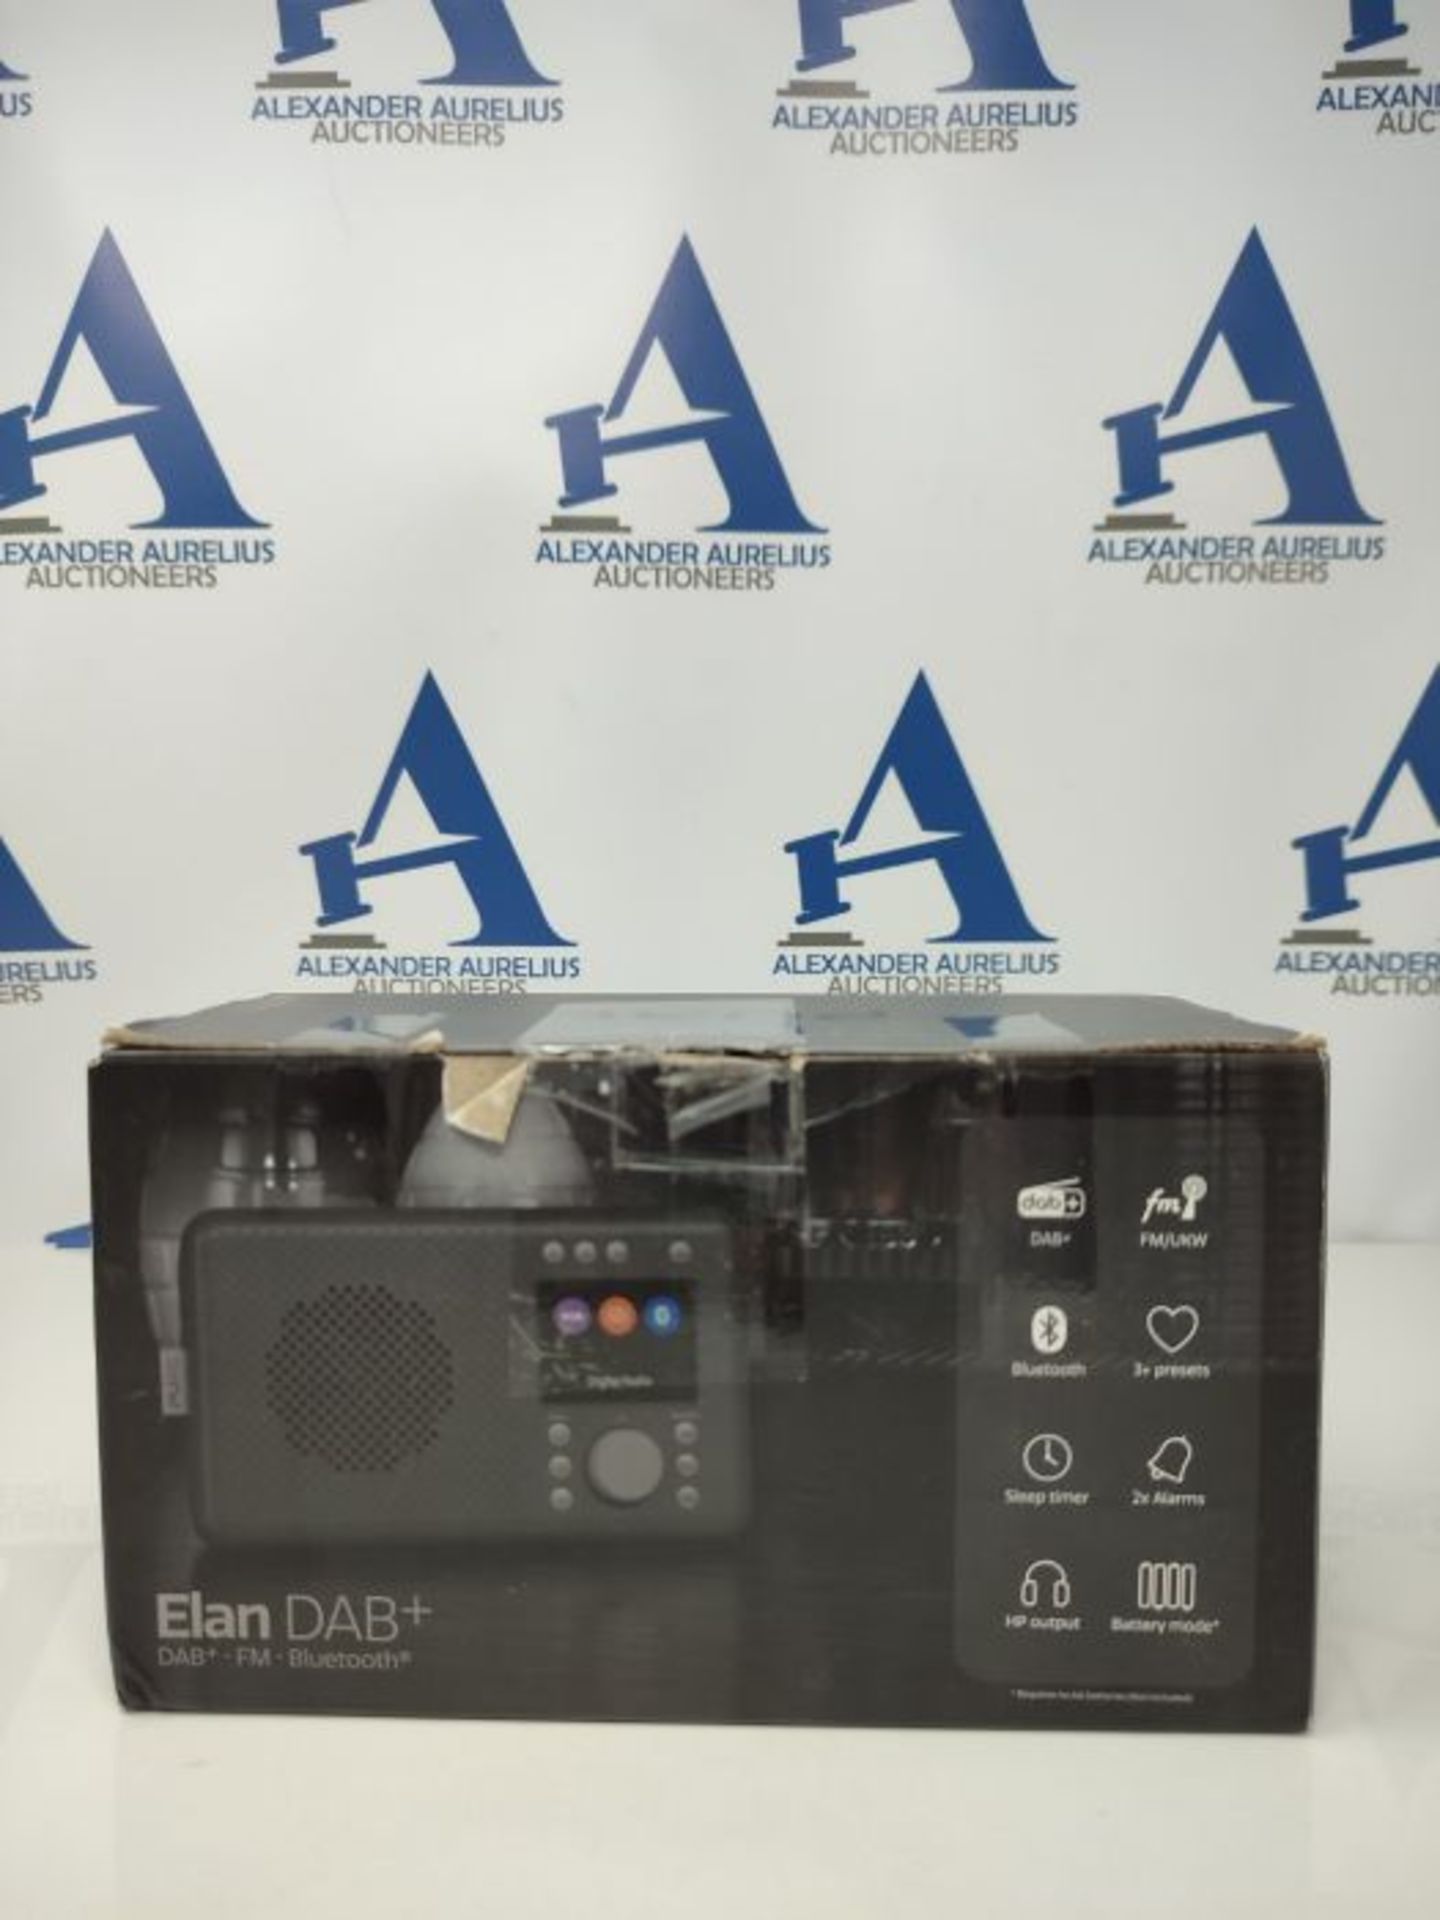 Pure - Elan DAB + Radio With Bluetooth - Image 2 of 3